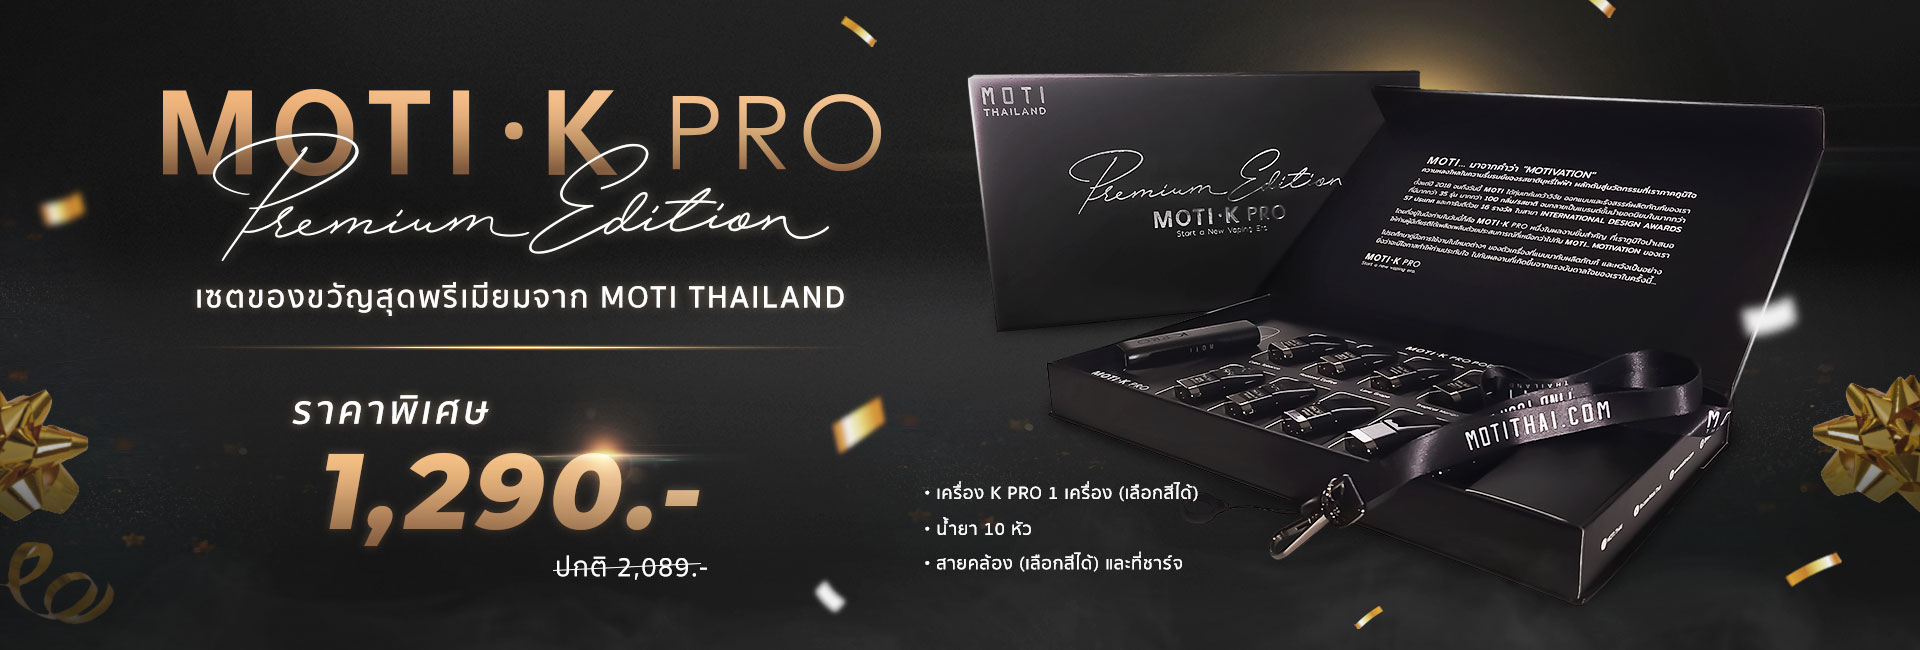 MOTI K PRO PREMIUM EDITION motithailand.com โมติไทยแลนด์ บุหรี่ไฟฟ้า หัวน้ำยา Moti Slite vape #บุหร่าไฟฟี้ pods หัวน้ำยา ครบวงจร